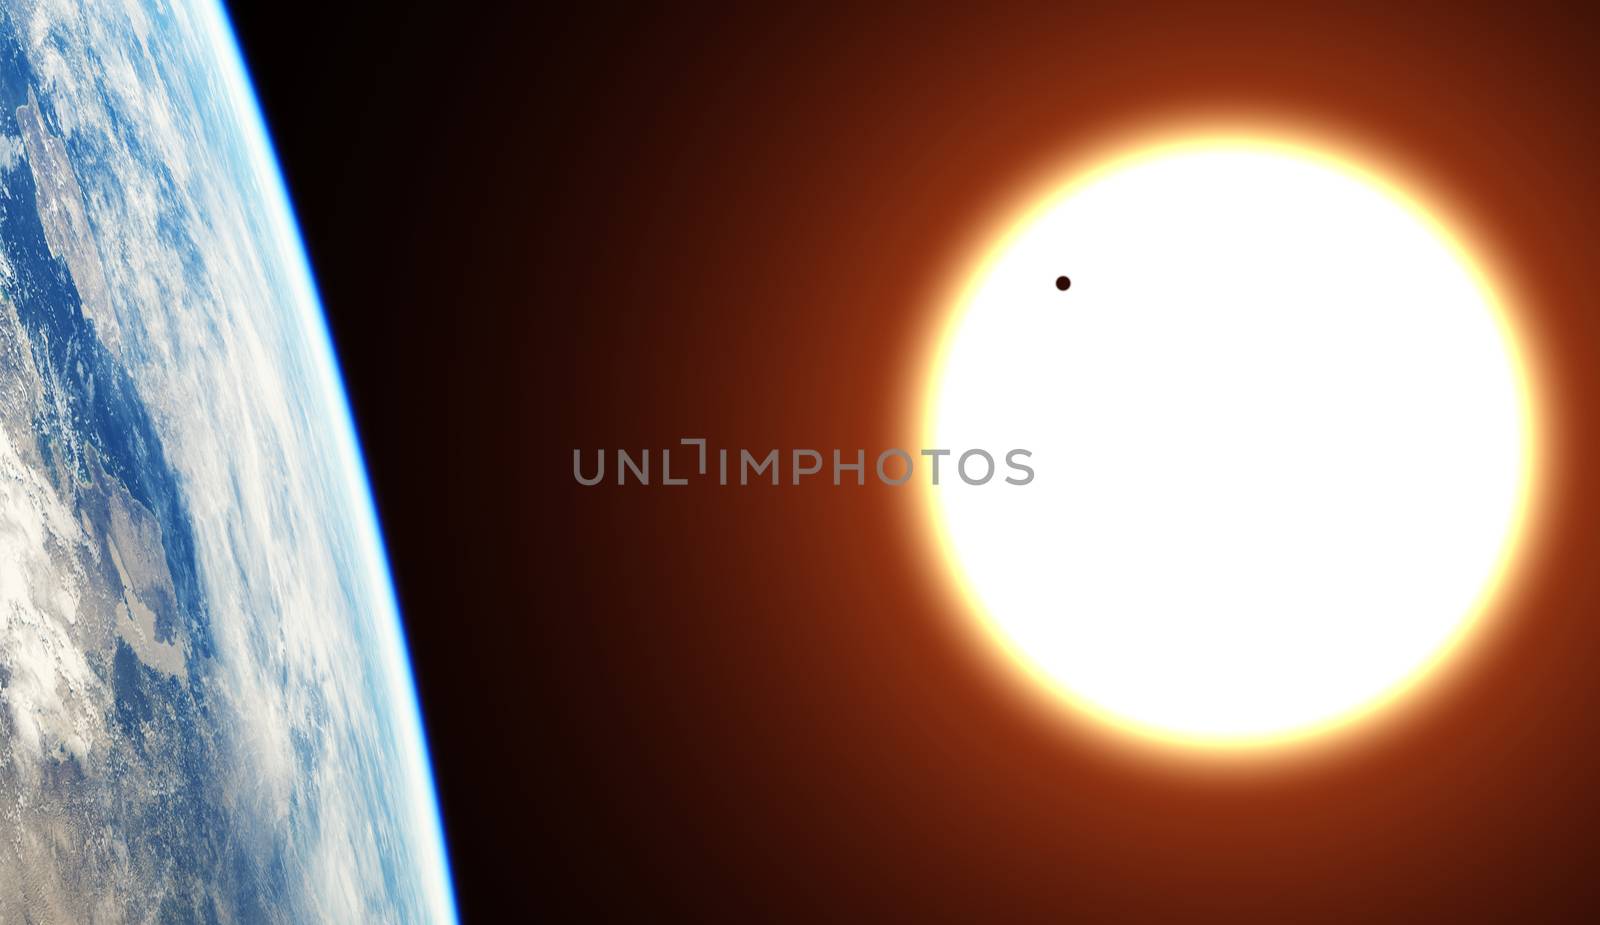 Transit of Planet Venus across the Sun by EnricoAgostoni